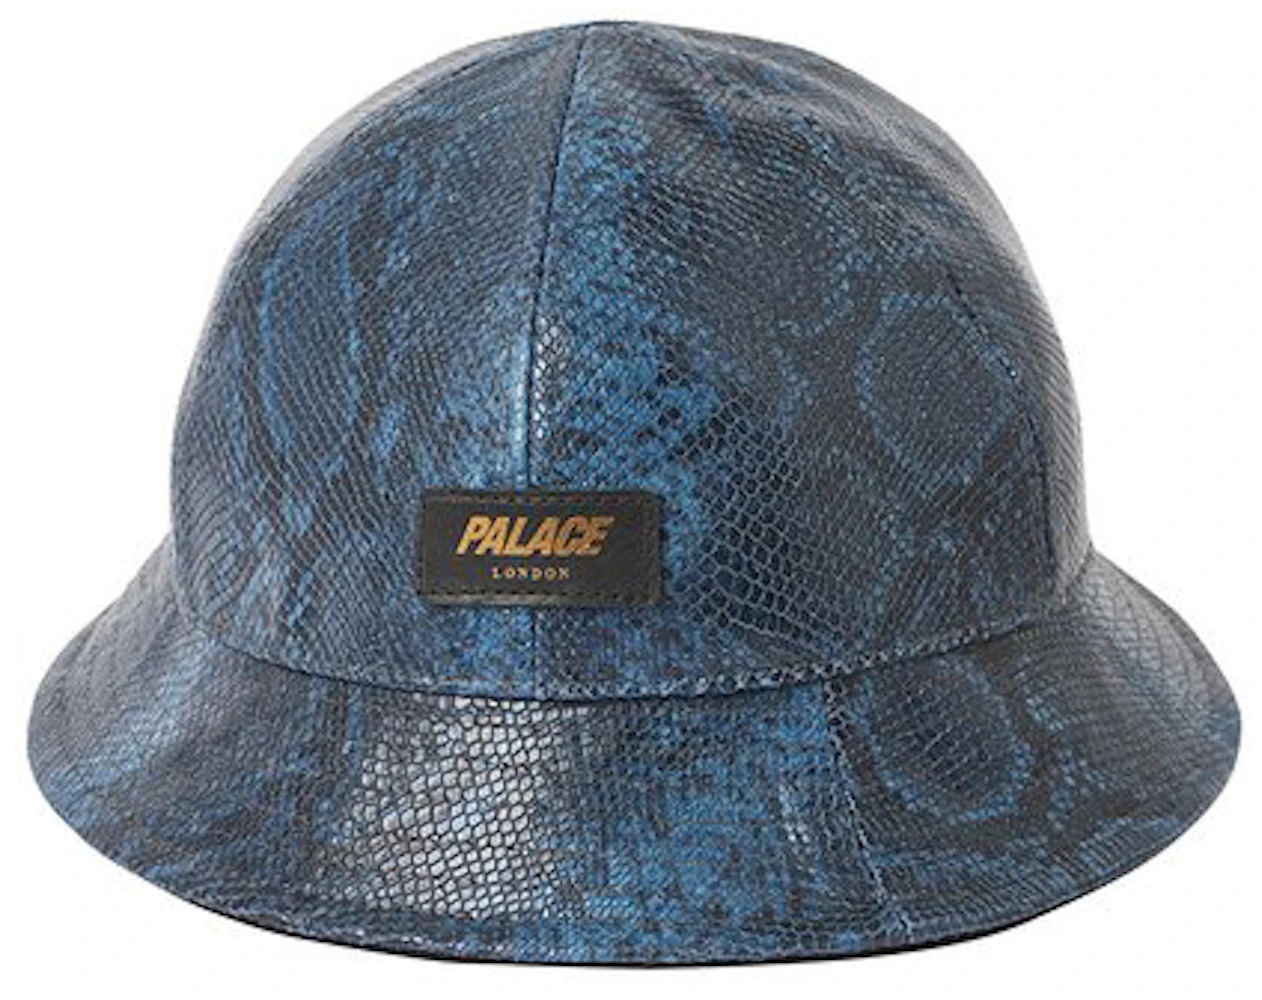 Palace Leather Bucket Blue Men's - SS20 - US